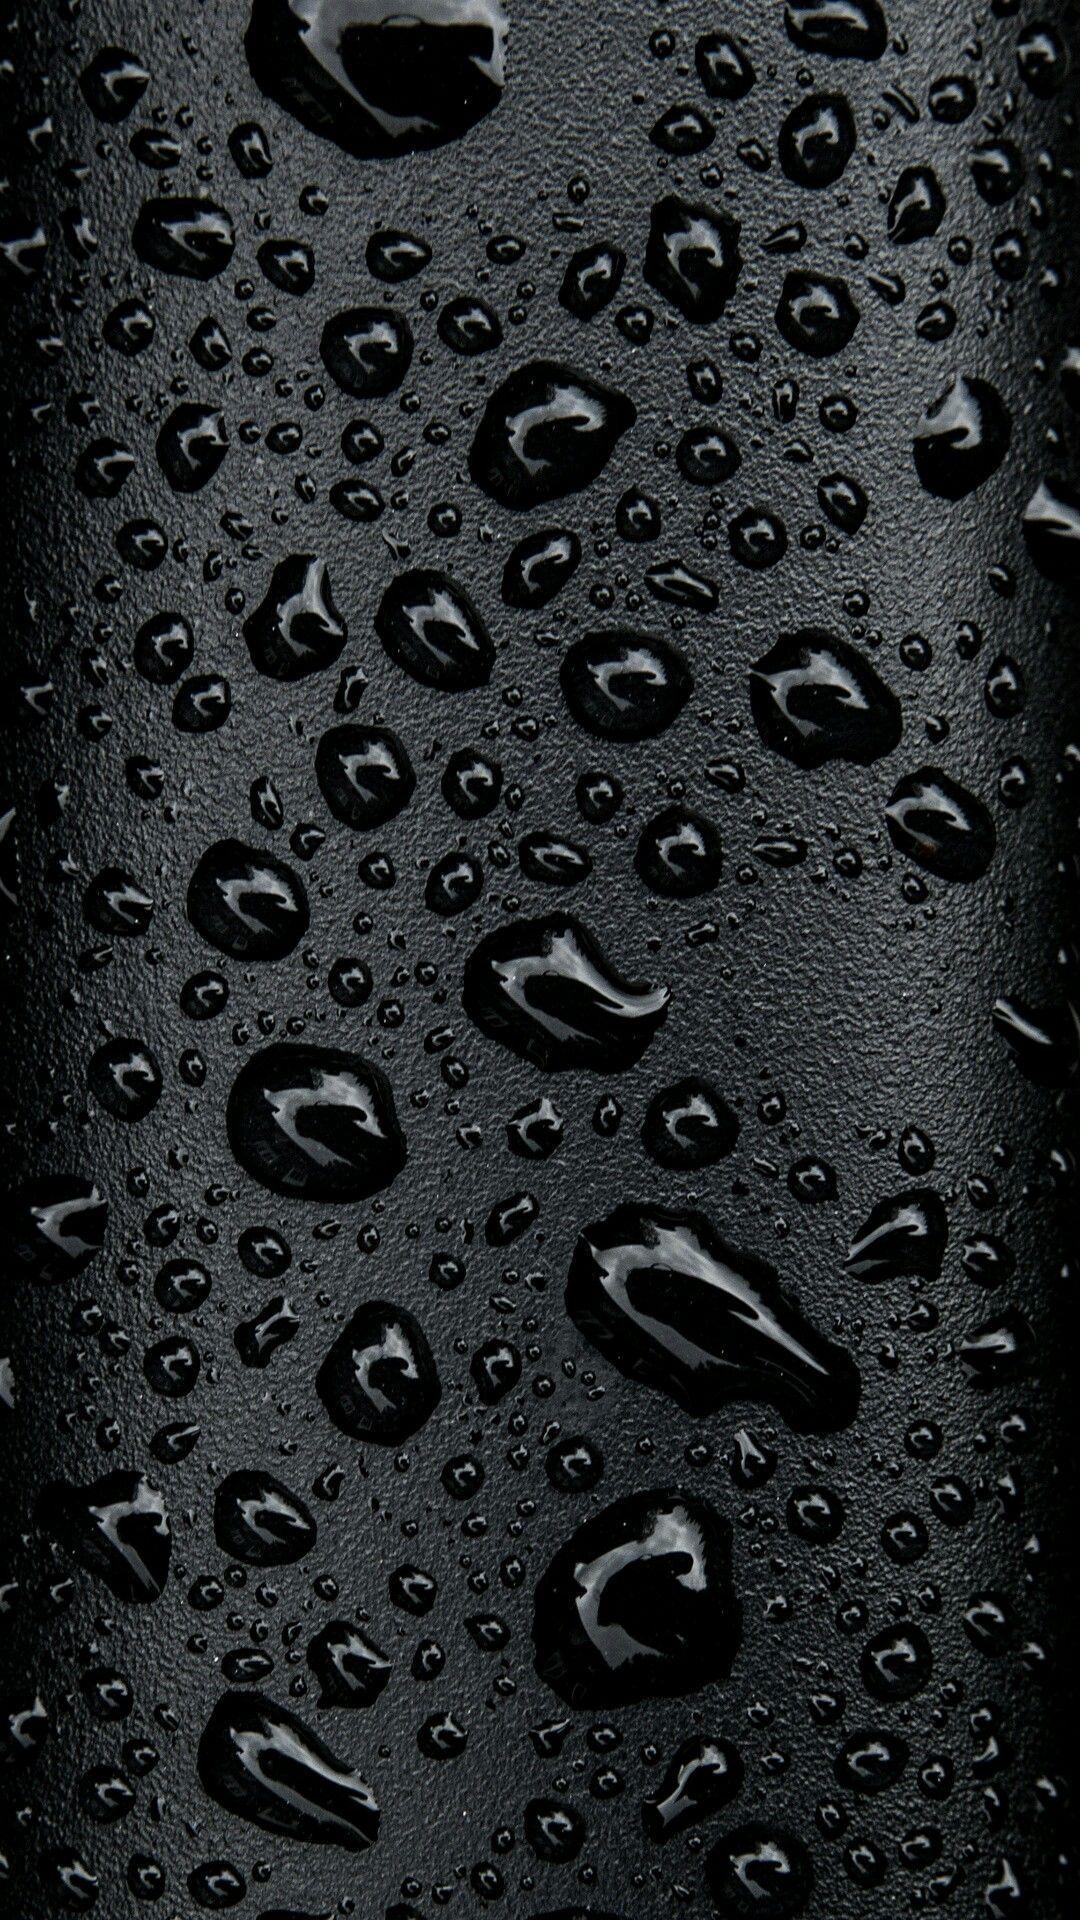 Black Water Droplets. Wallpaper (for phones) ㊗. iPhone wallpaper